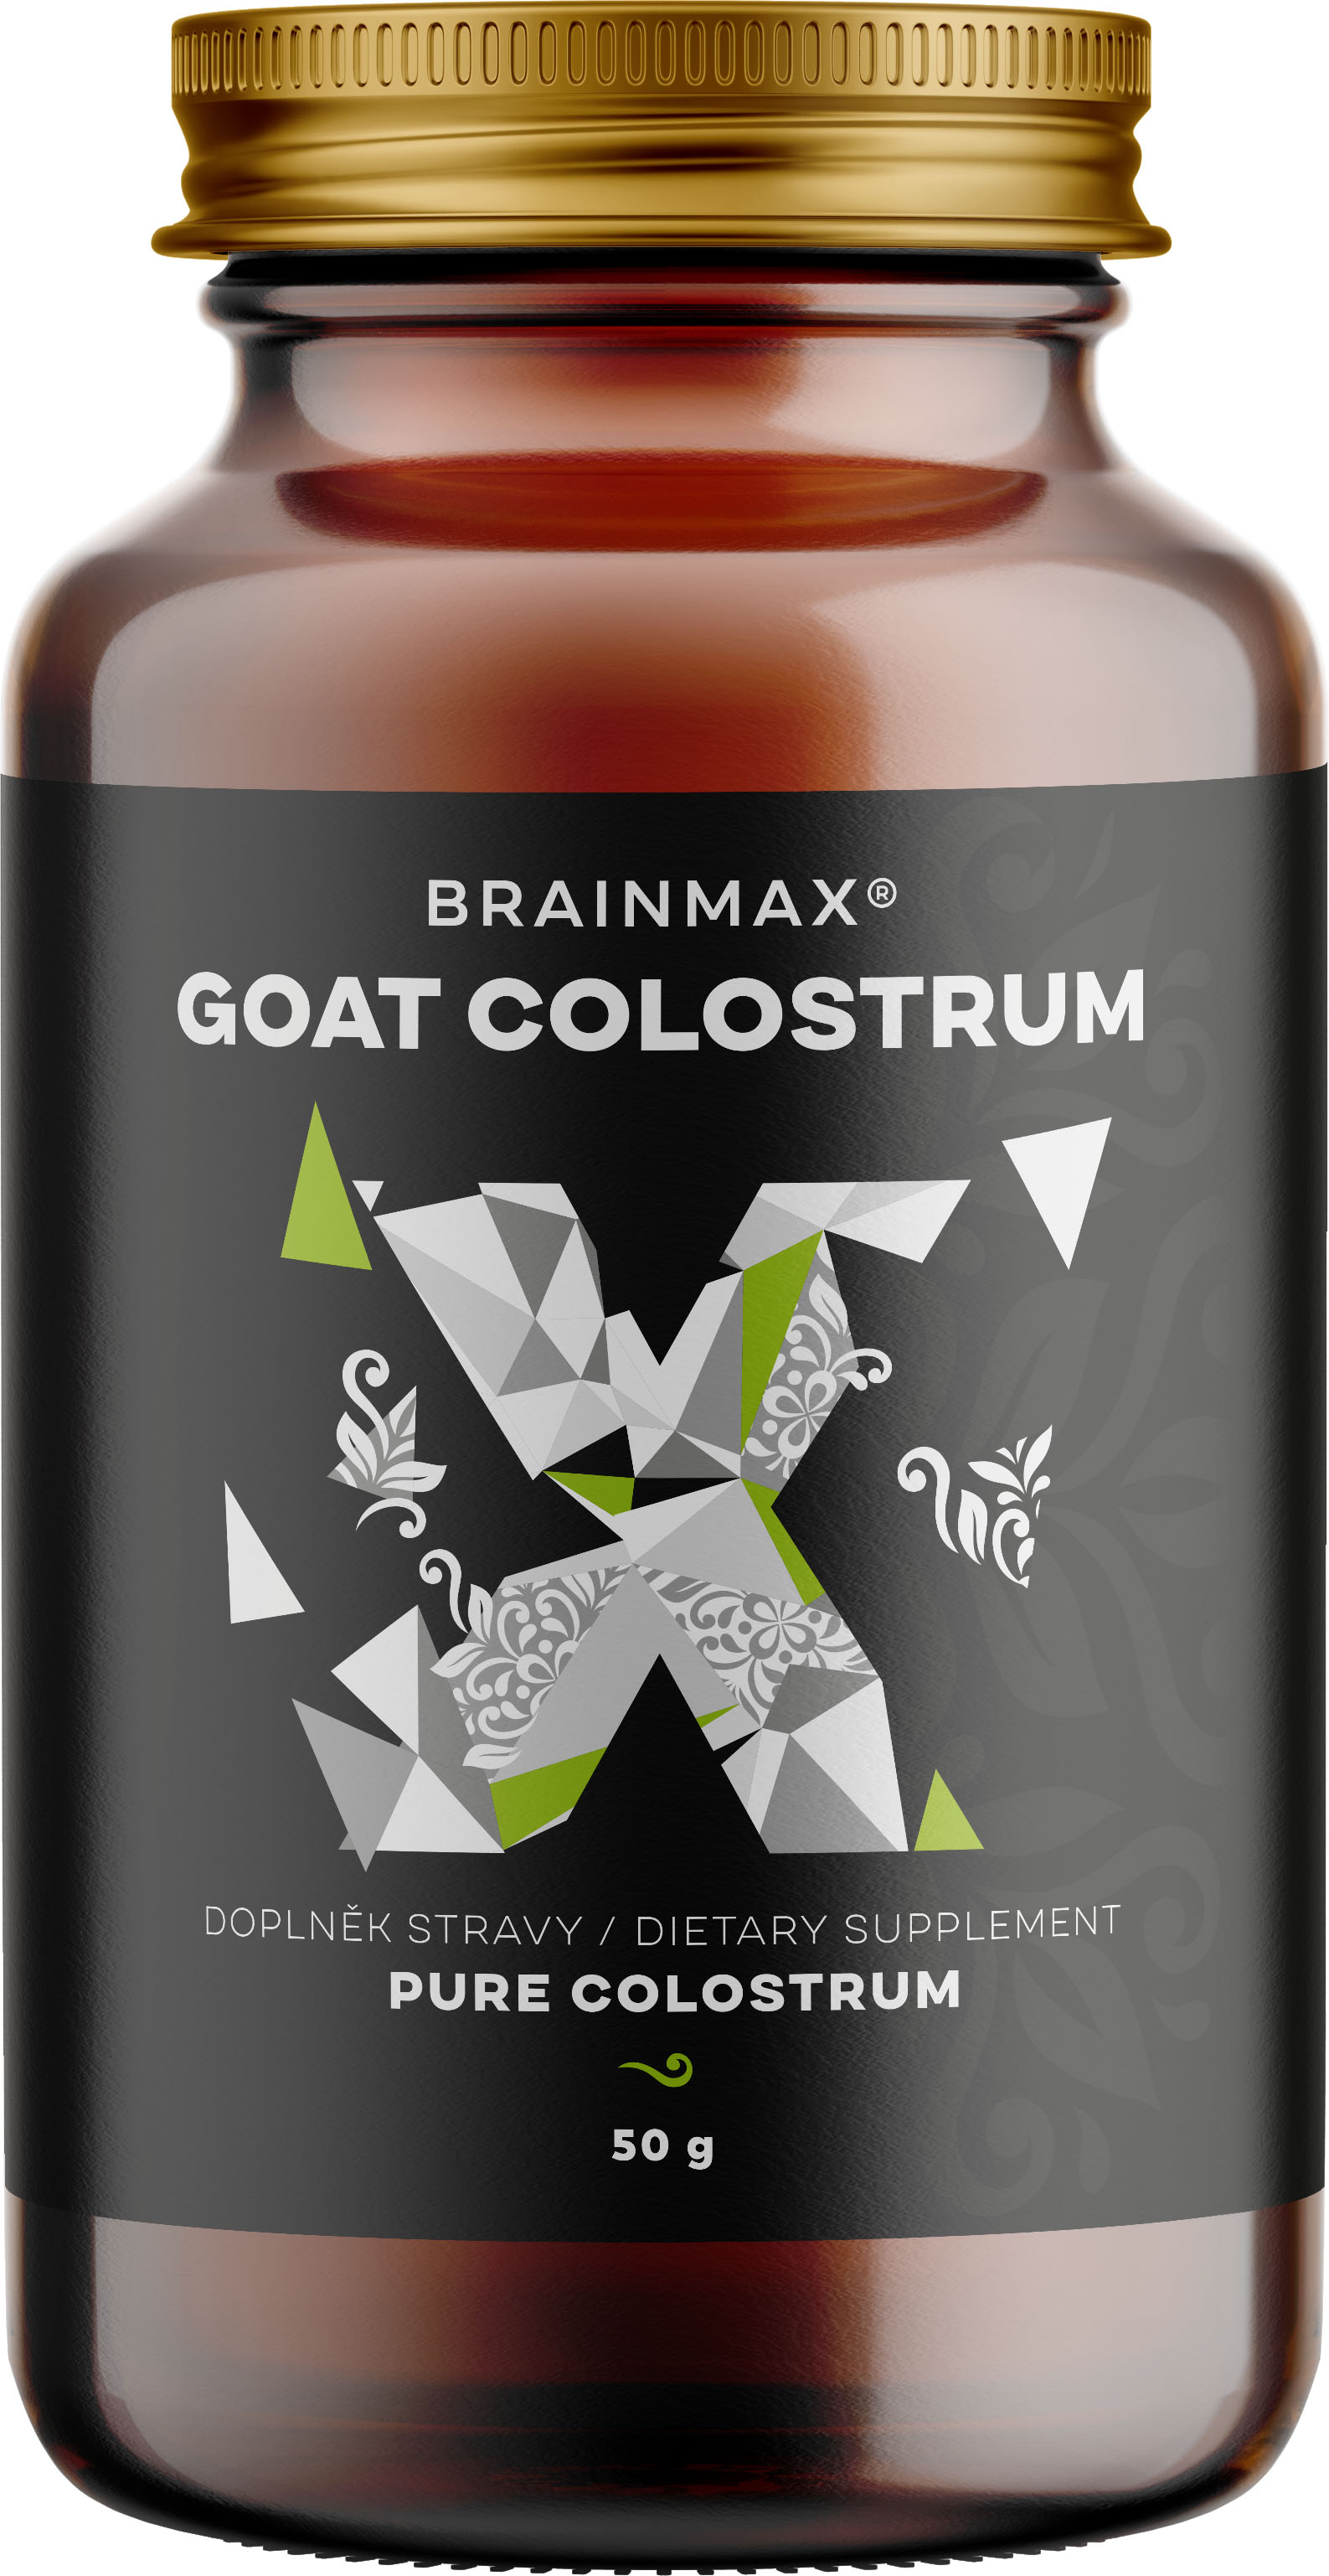 BrainMax Goat Colostrum, kozí kolostrum v prášku, 50 g Kolostrum v prášku, doplněk stravy